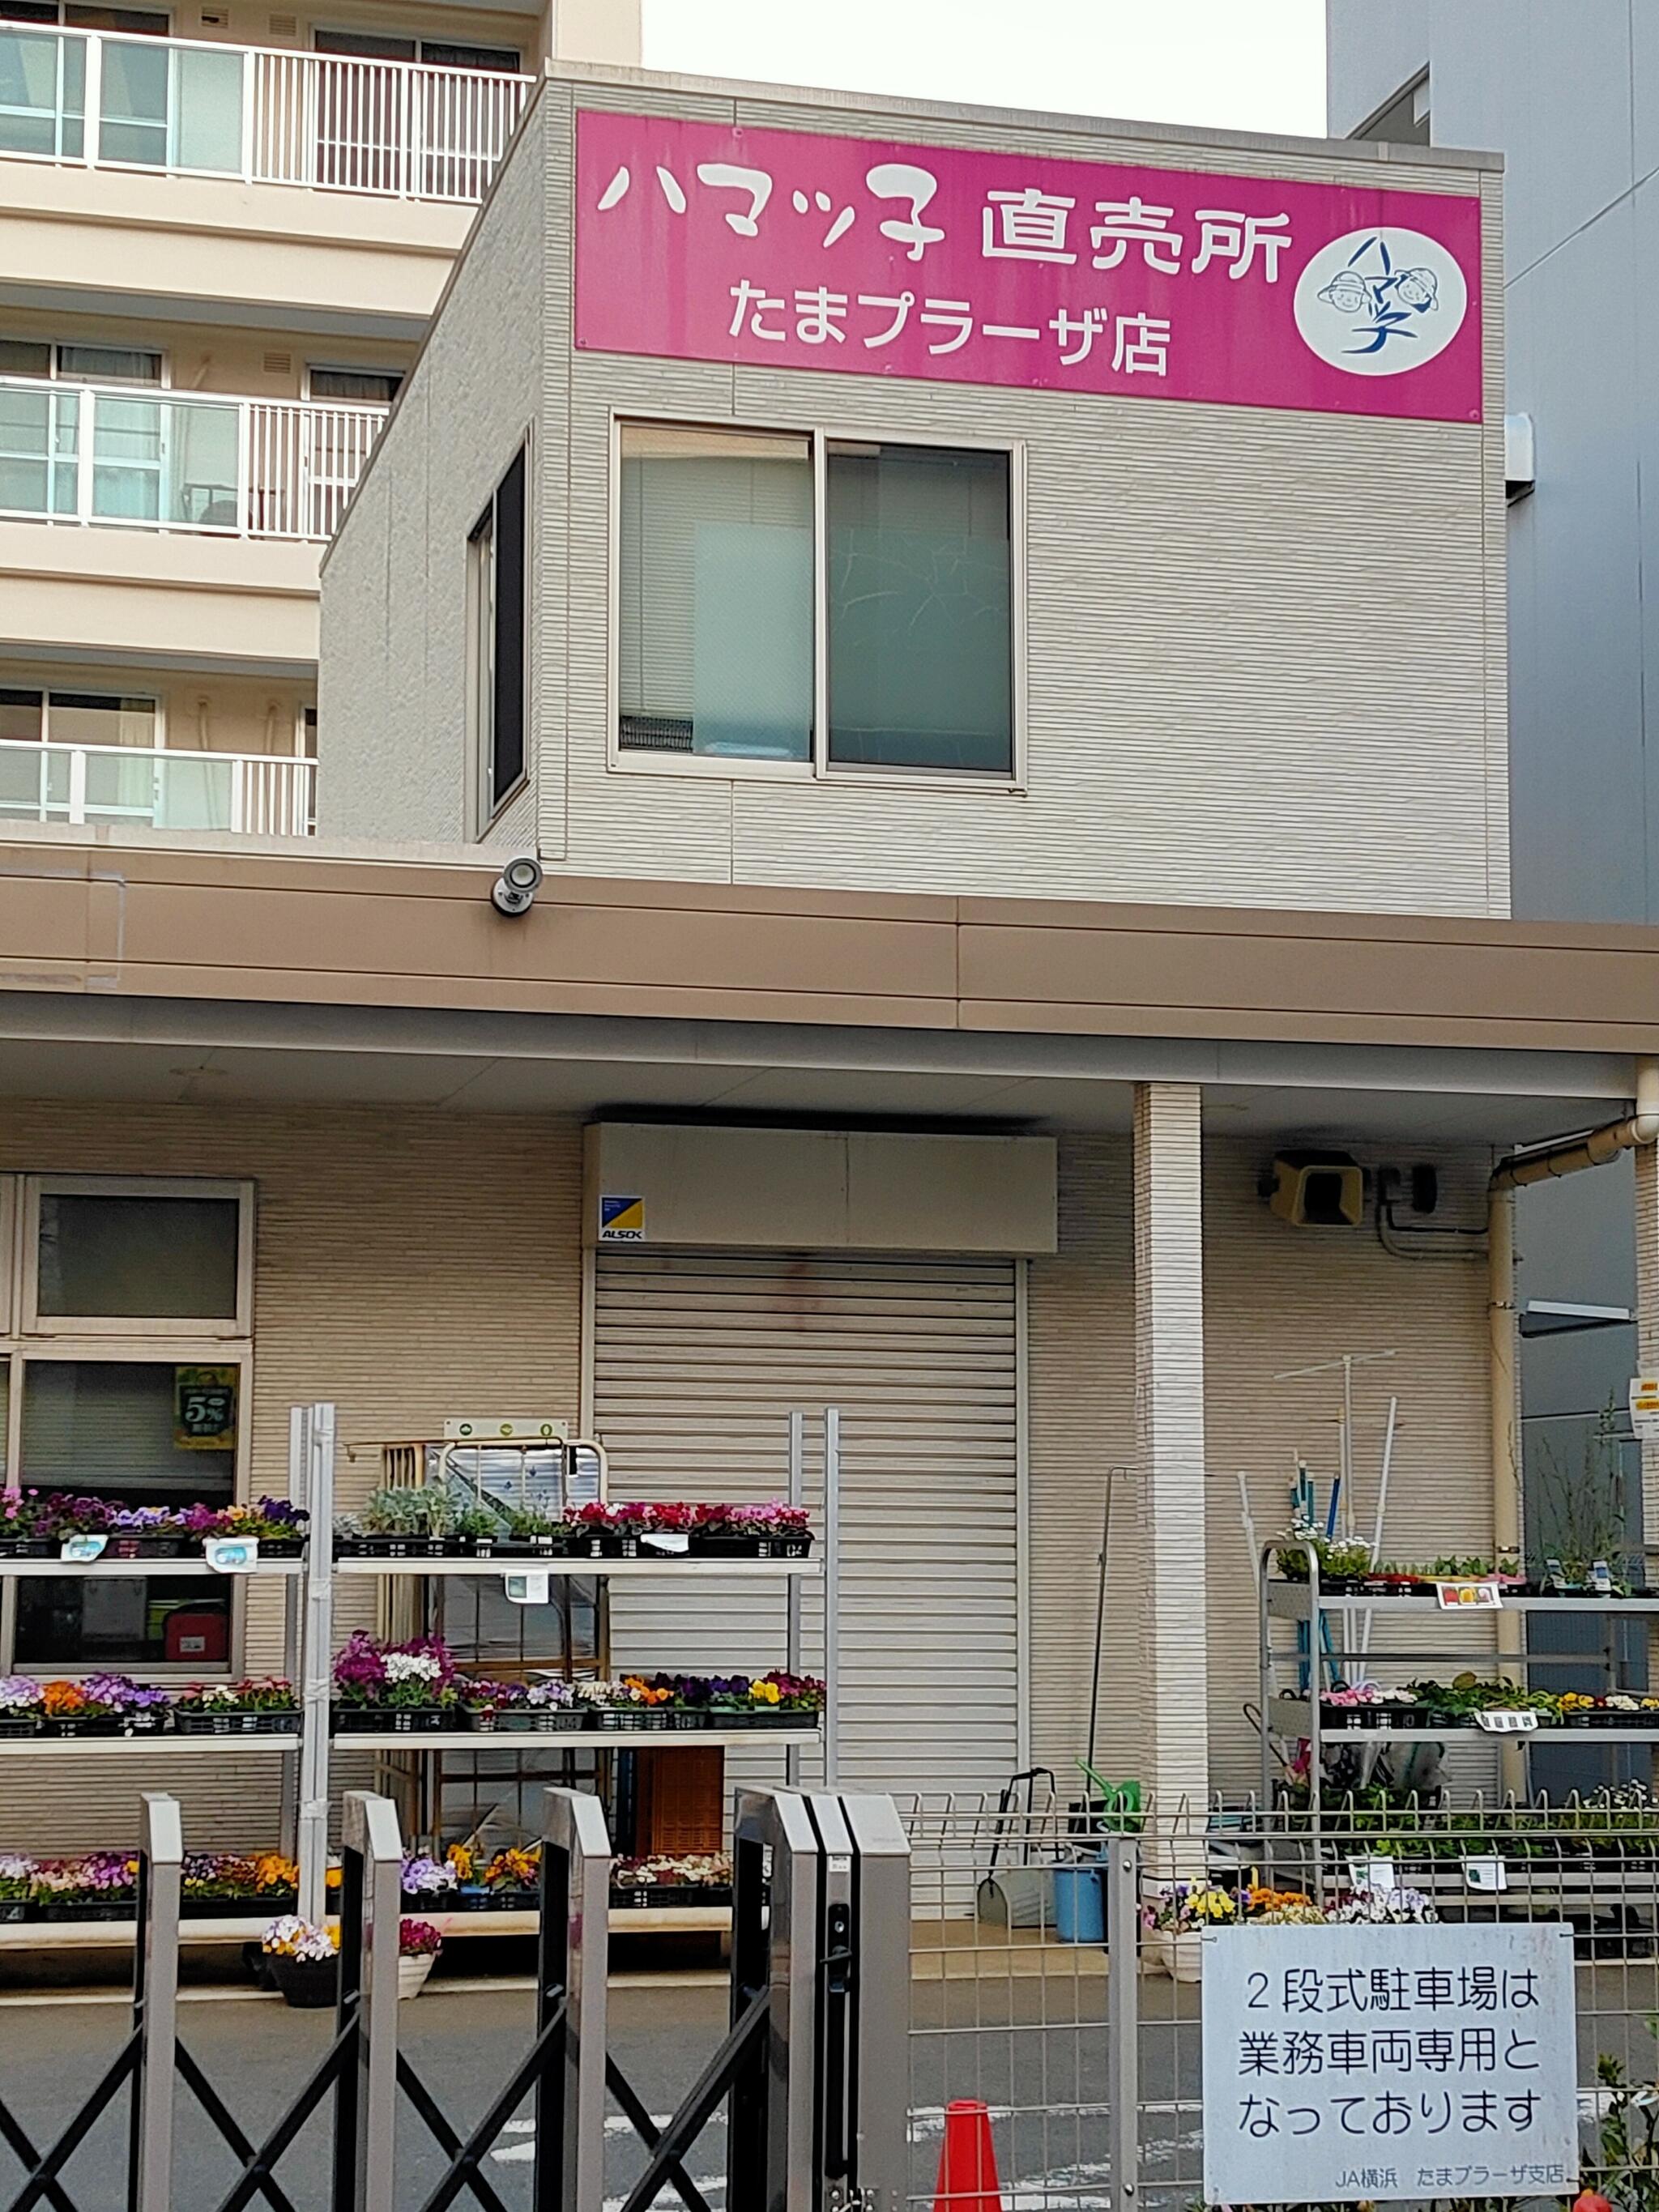 JA直売所 「ハマッ子」直売所 たまプラーザ店の代表写真7